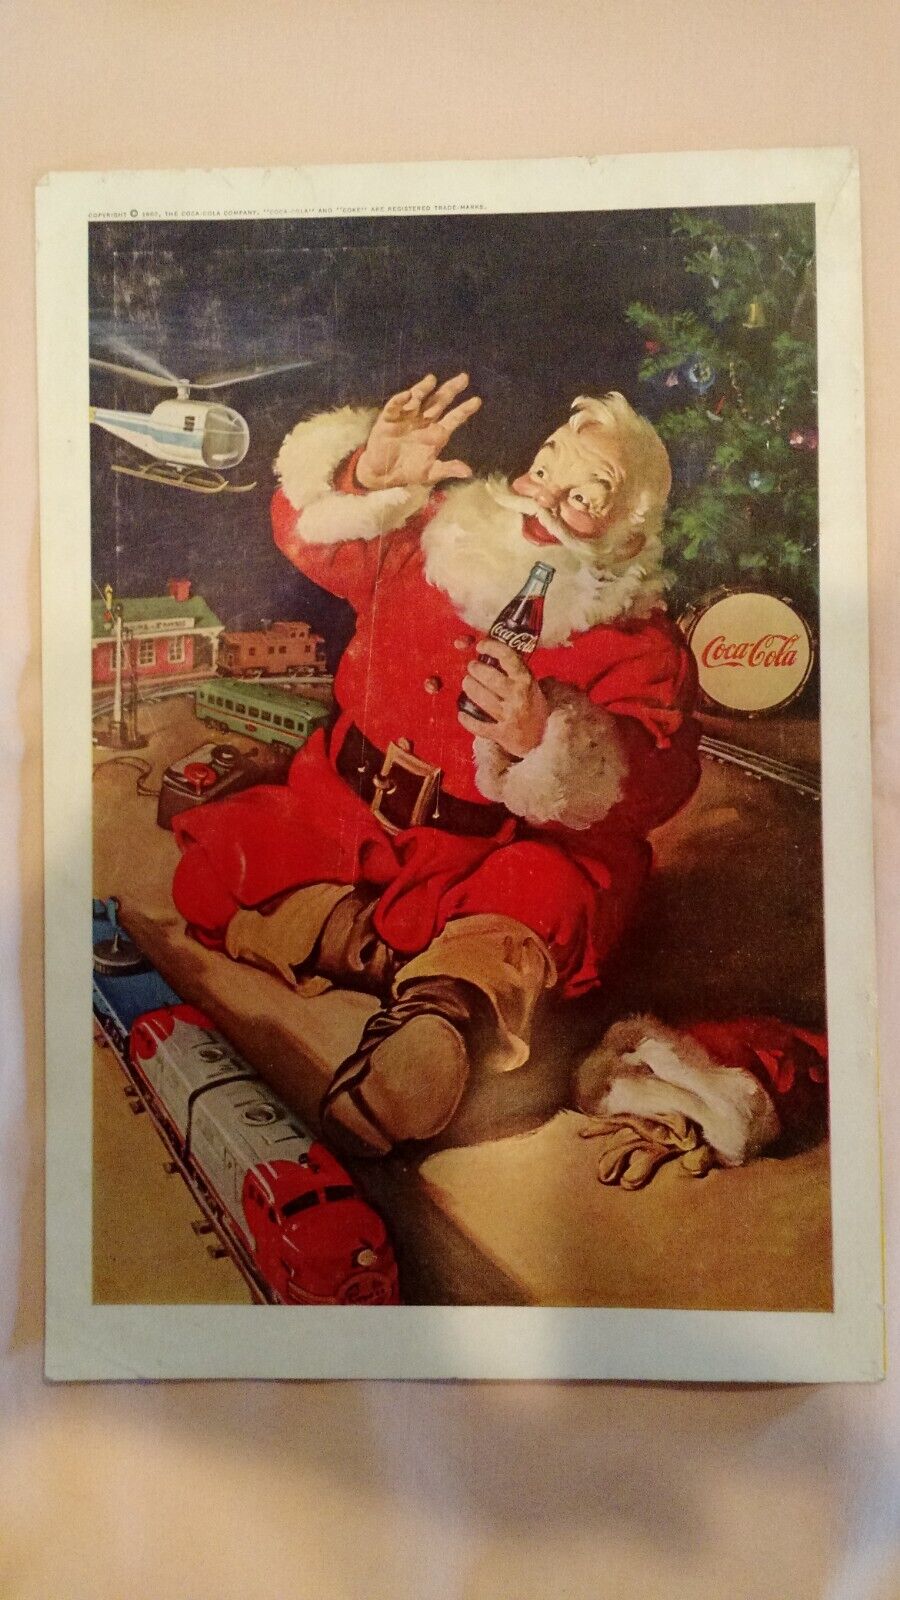 COCA-COLA COKE CHRISTMAS PRINT AD FROM DEC 1962 NAT GEO SANTA & TRAIN HELICOPTER